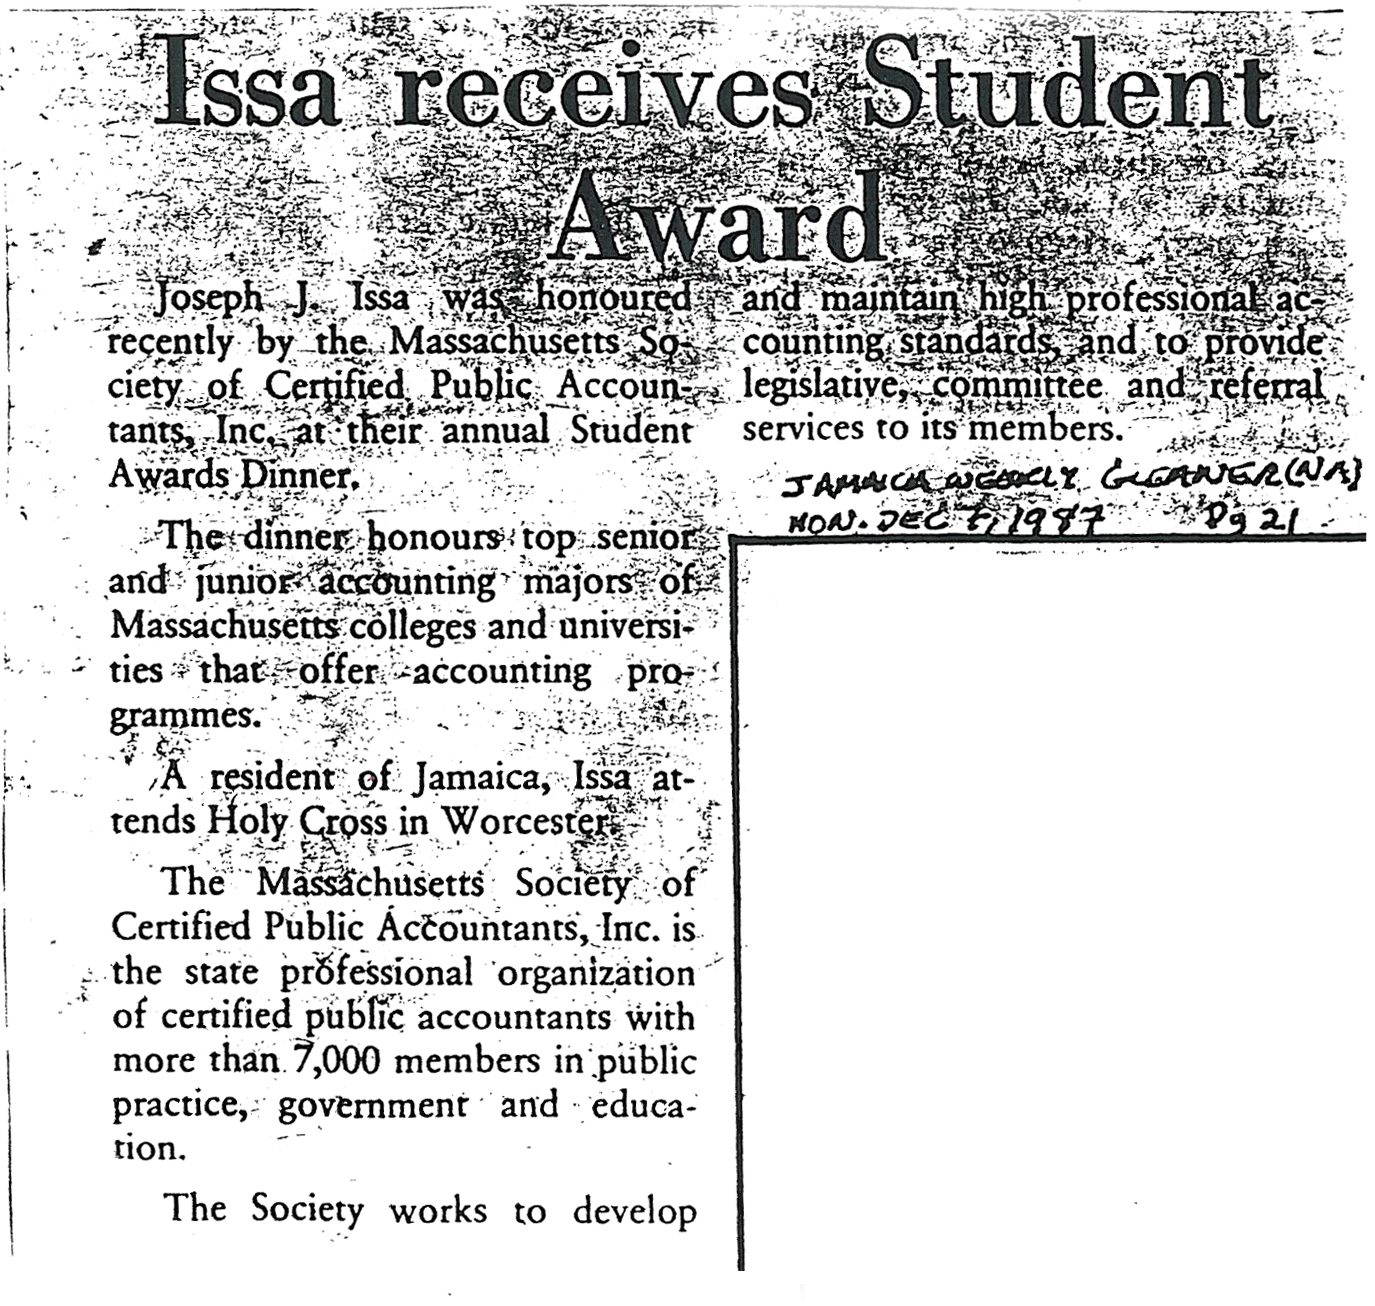 Issa receives Student Award